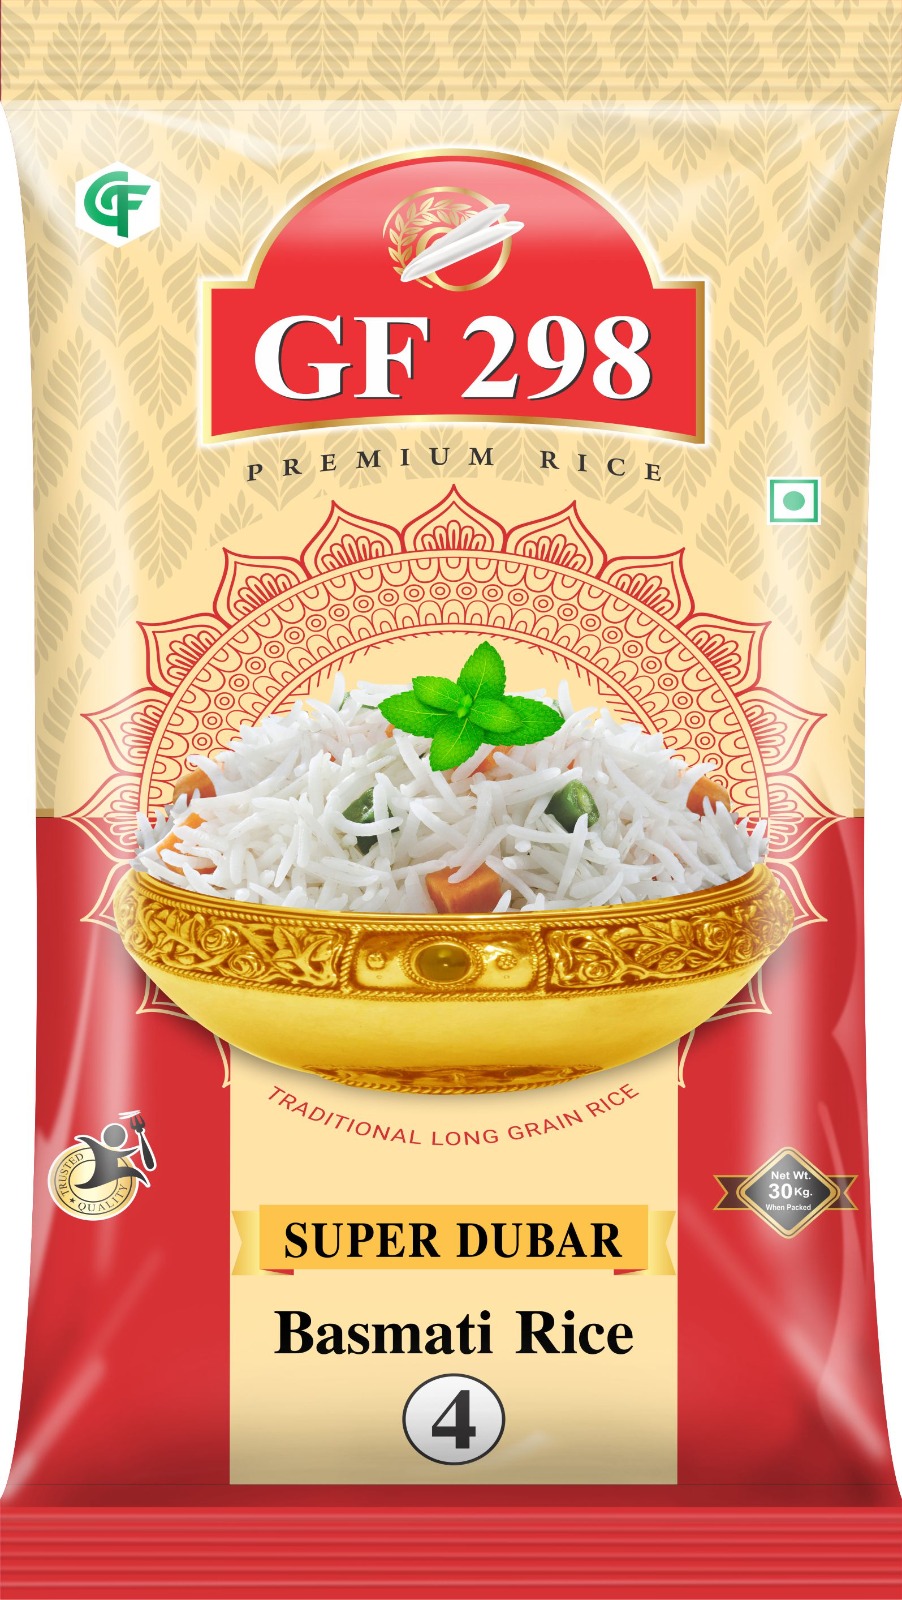 1718 Rice (super dubar Basmati rice)